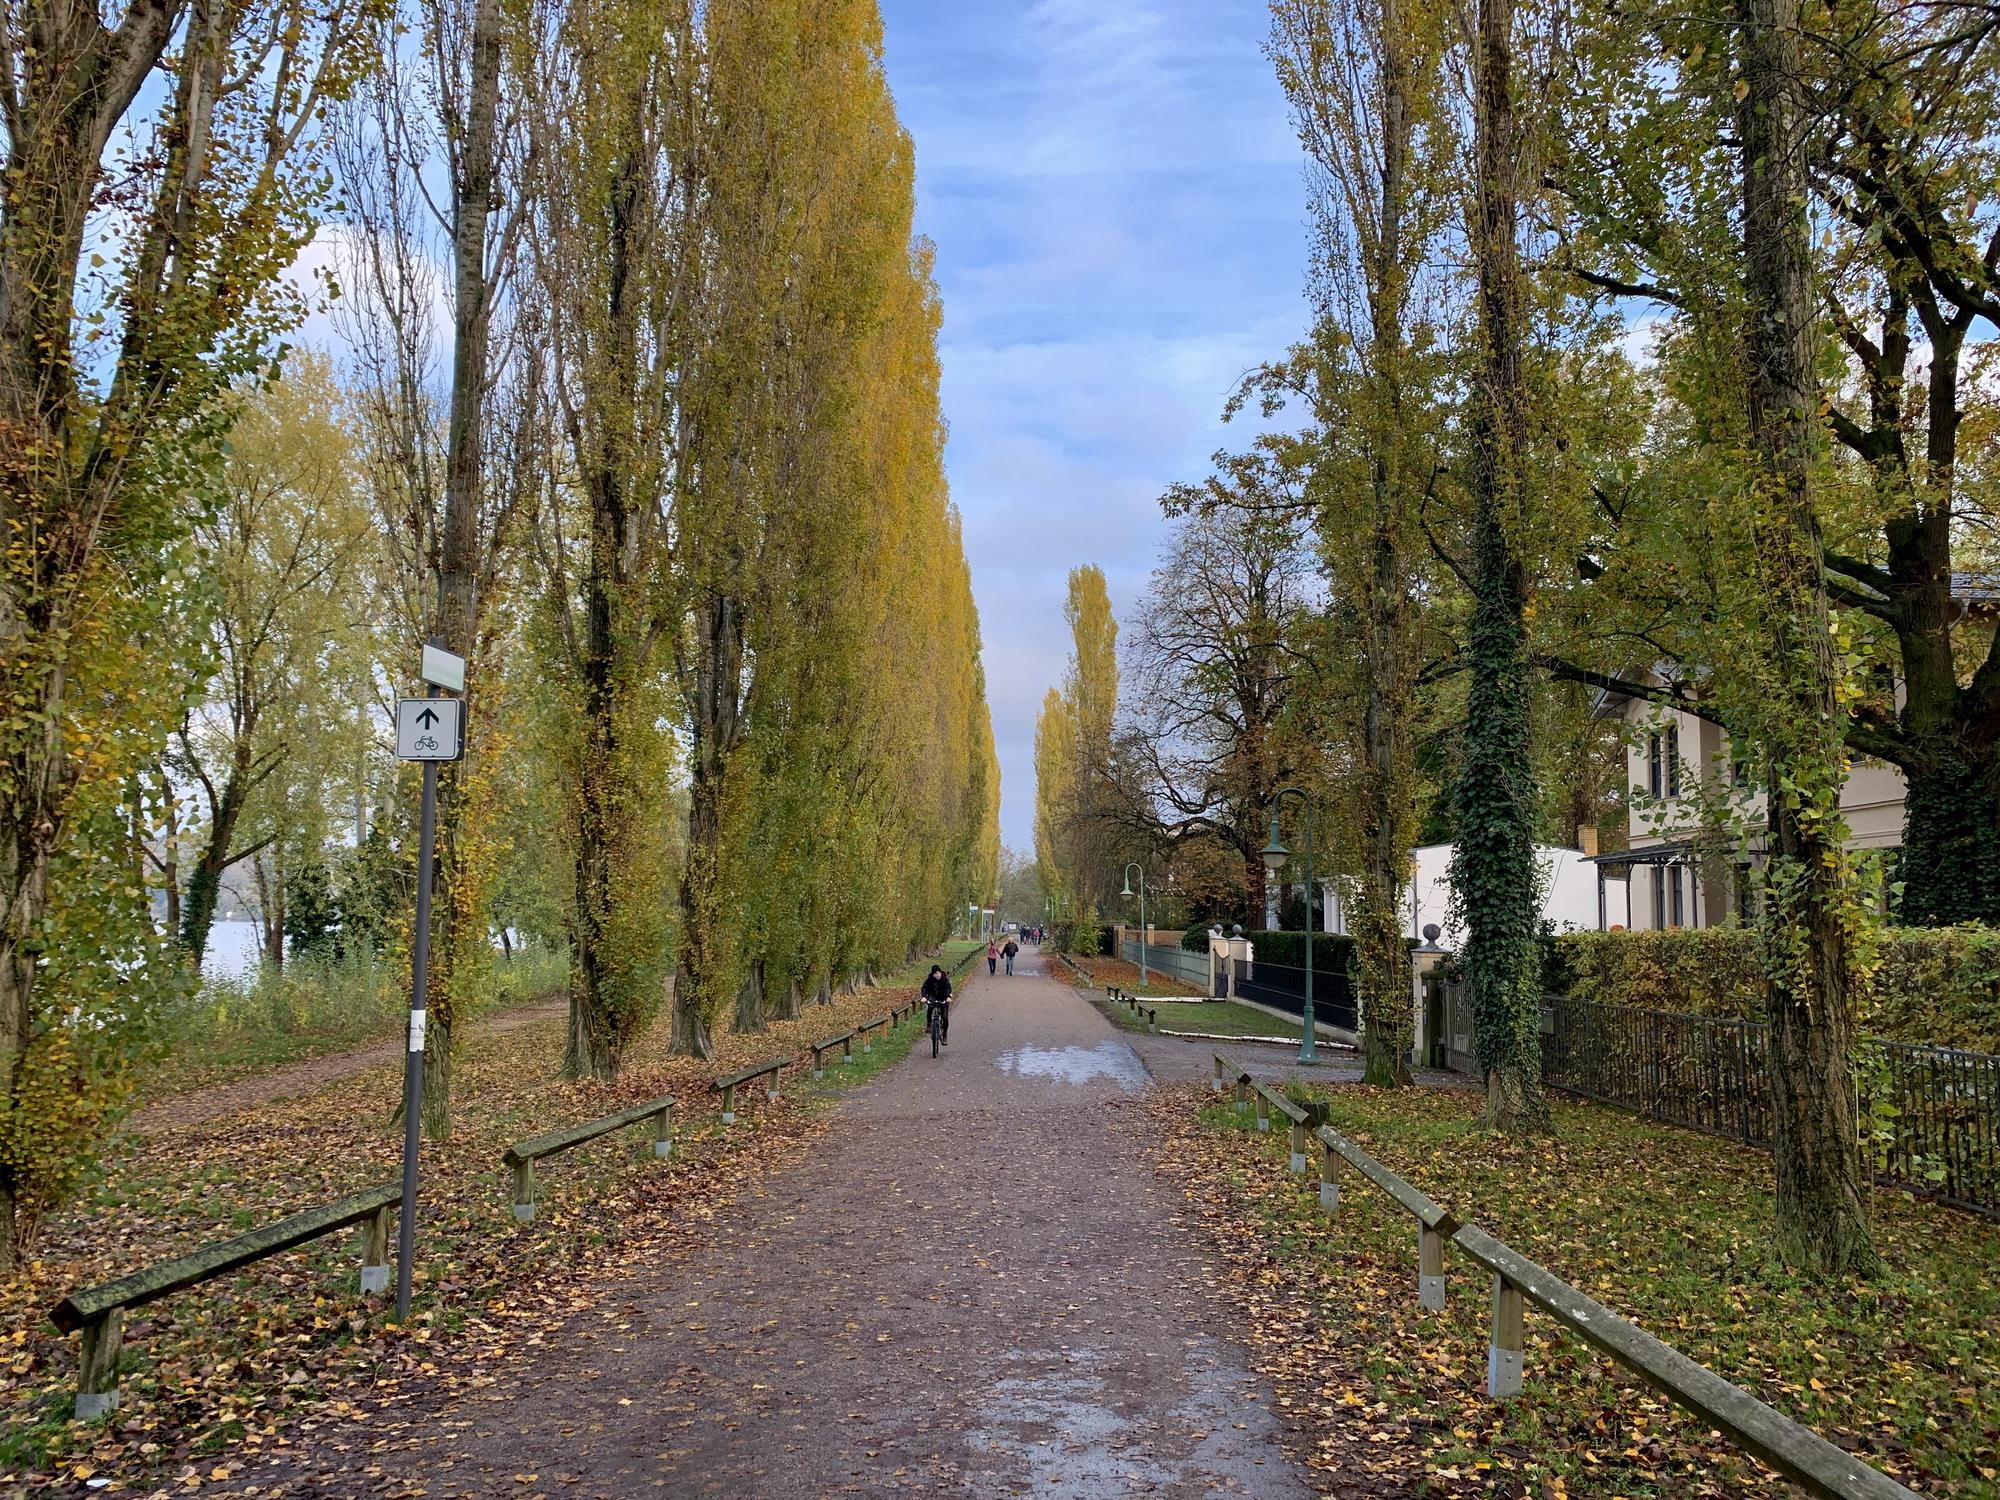 🇩🇪 Potsdam, Germany, November 2019.